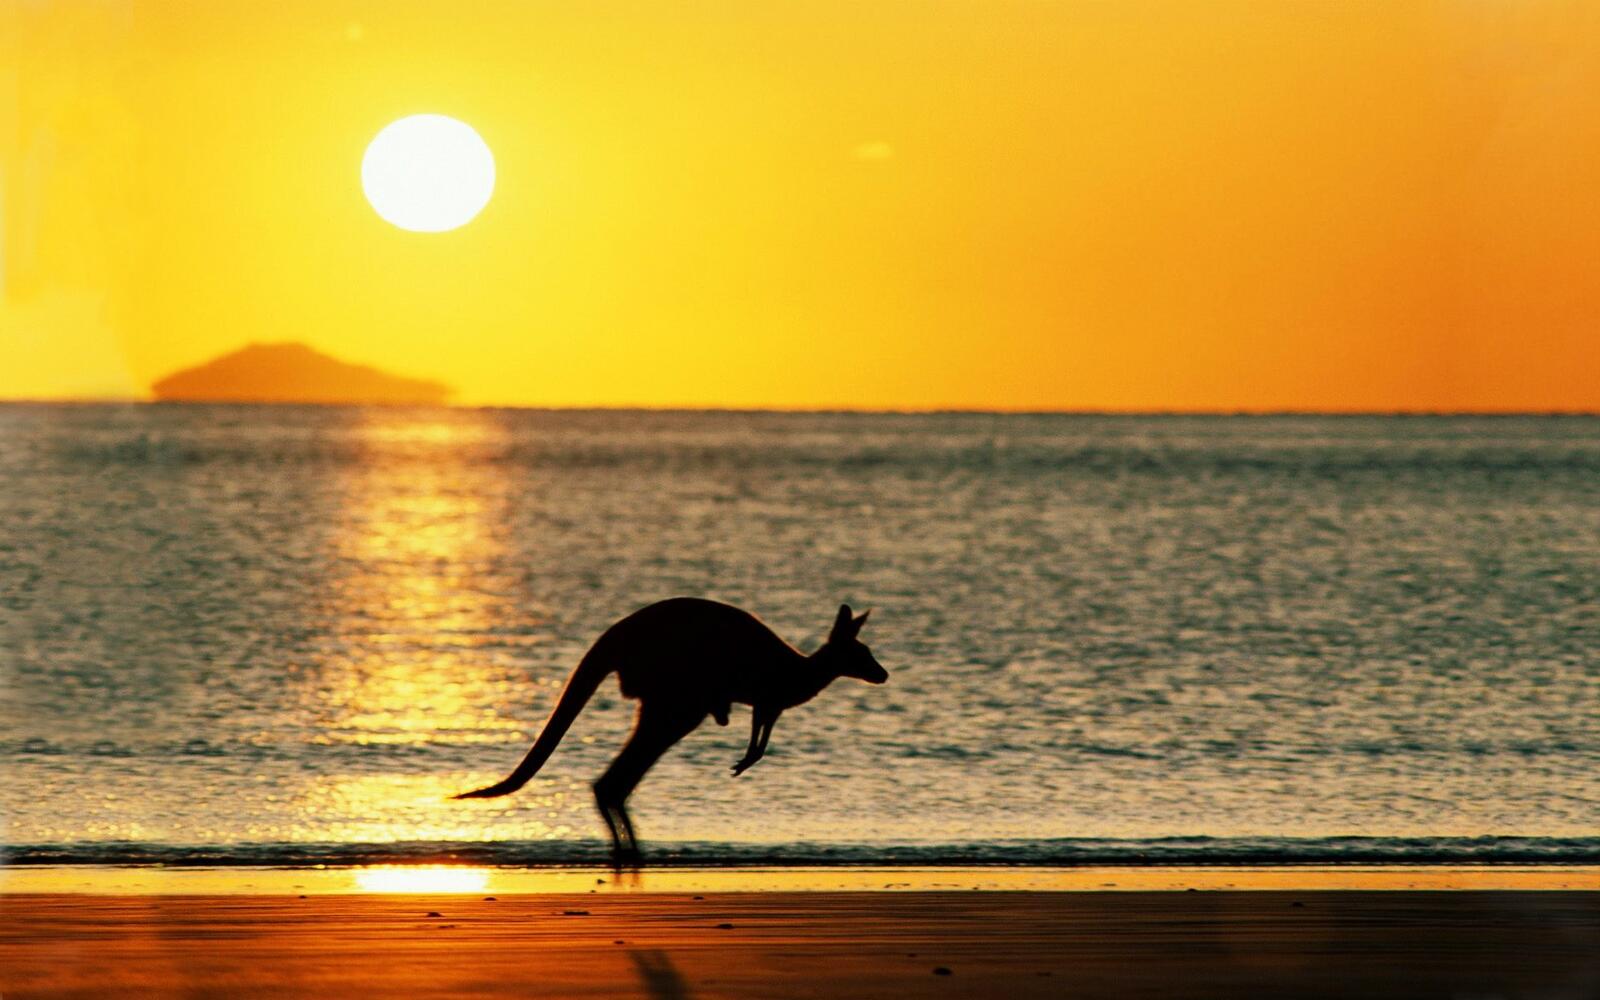 Free photo A silhouette of a kangaroo on a sandy beach